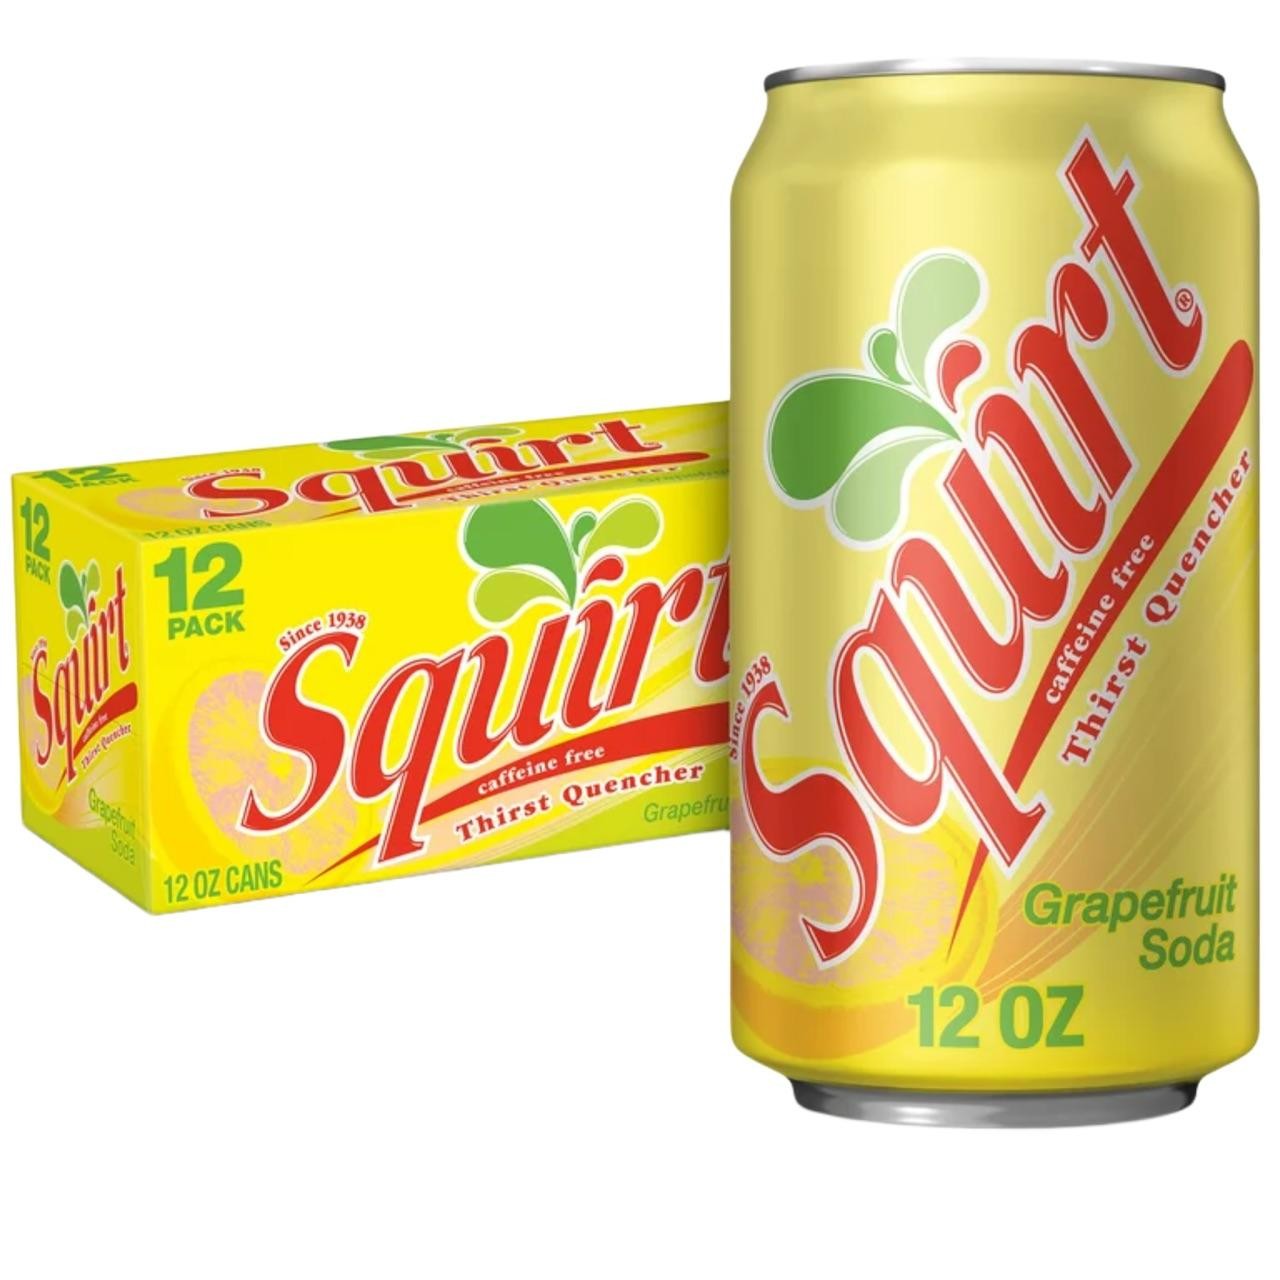 SQUIRT Grapefruit Soda Cans 12pk